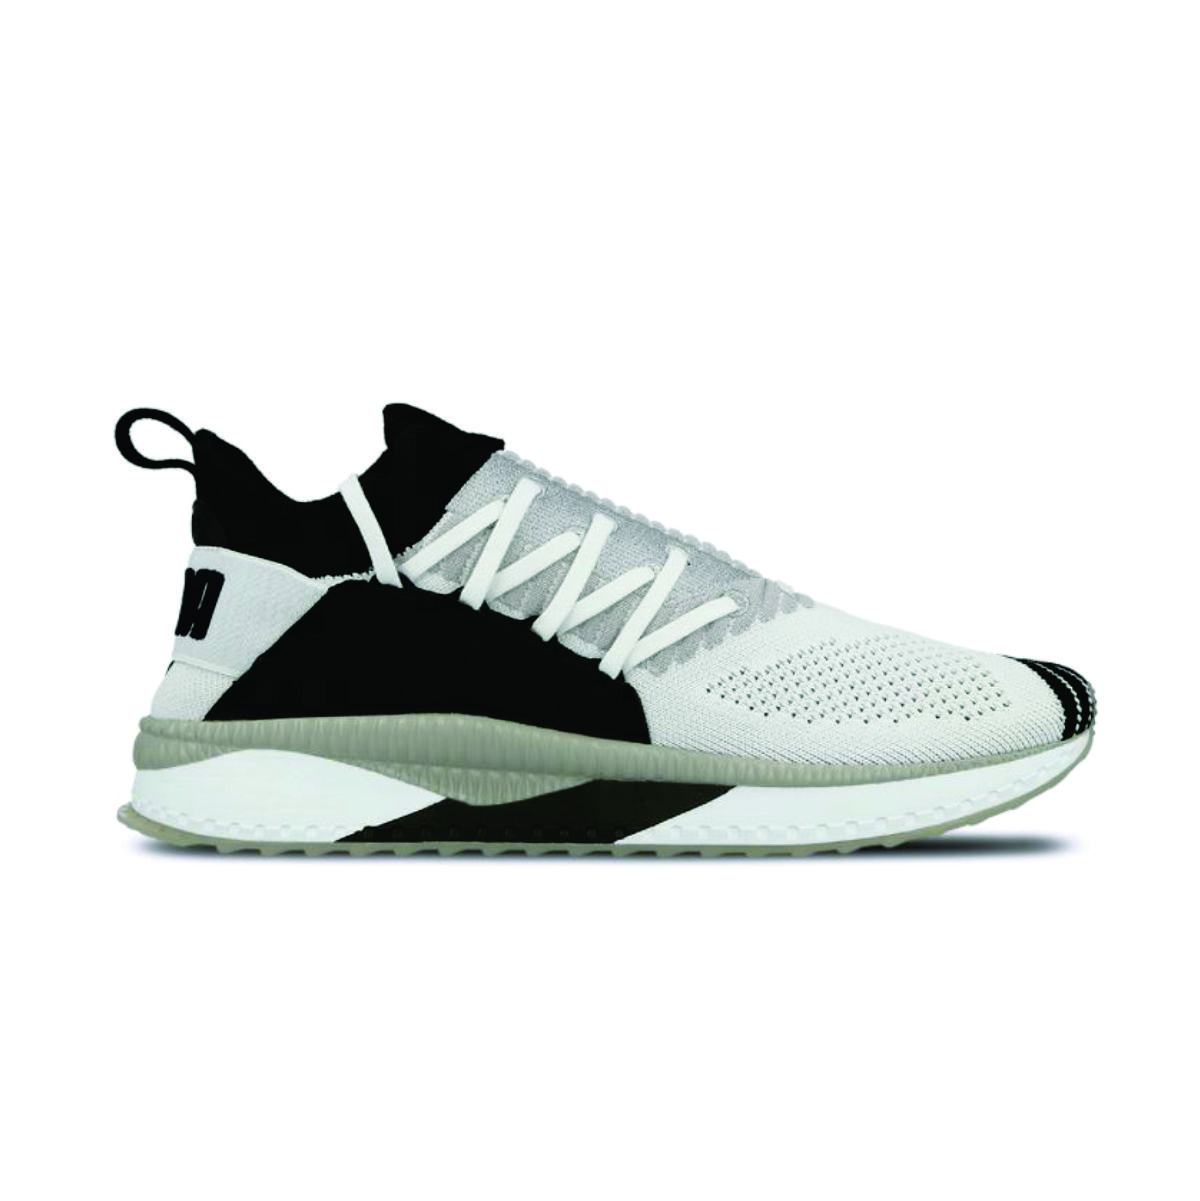 Buy�puma Sneakers�Online |�lazada.sg